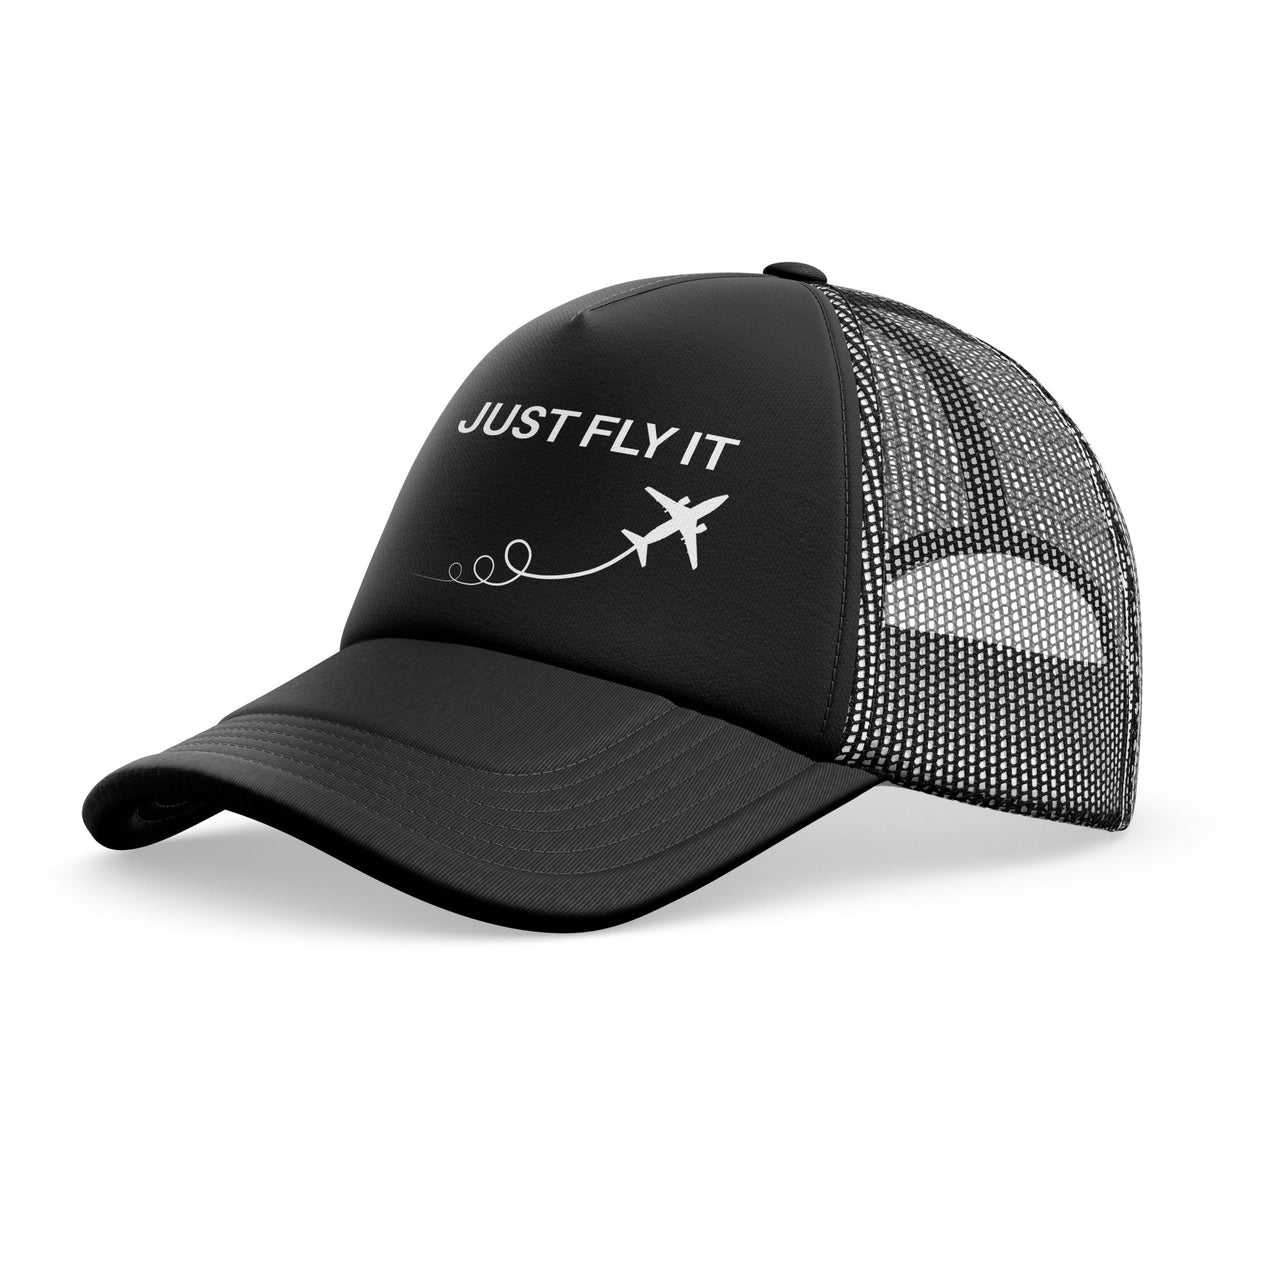 Just Fly It Designed Trucker Caps & Hats